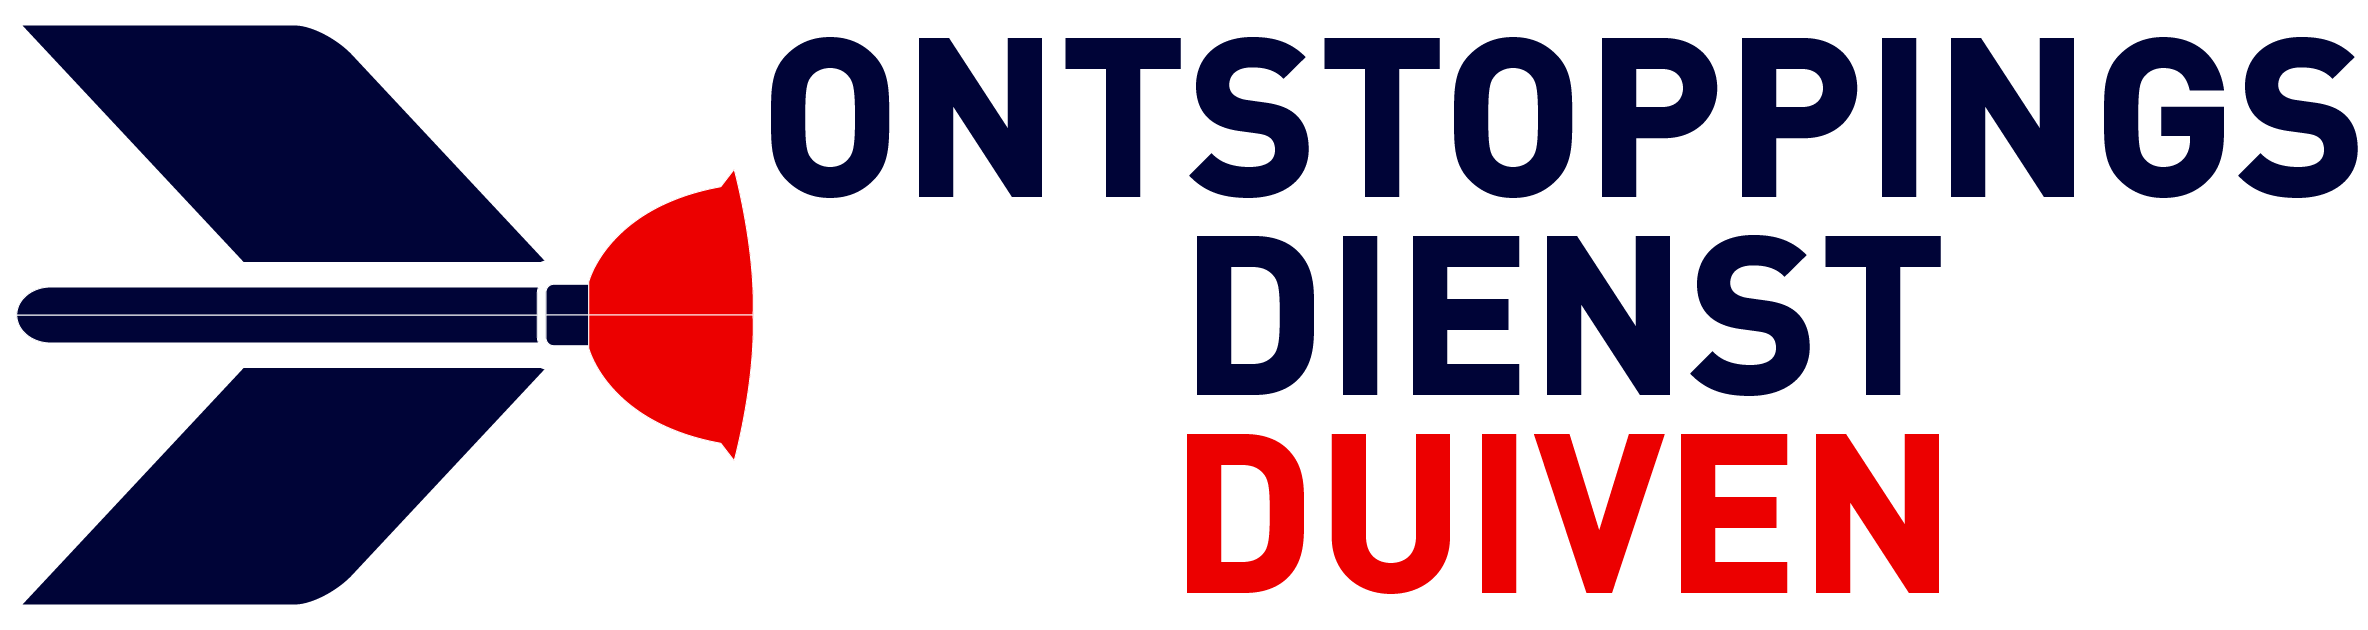 Ontstoppingsdienst Duiven logo